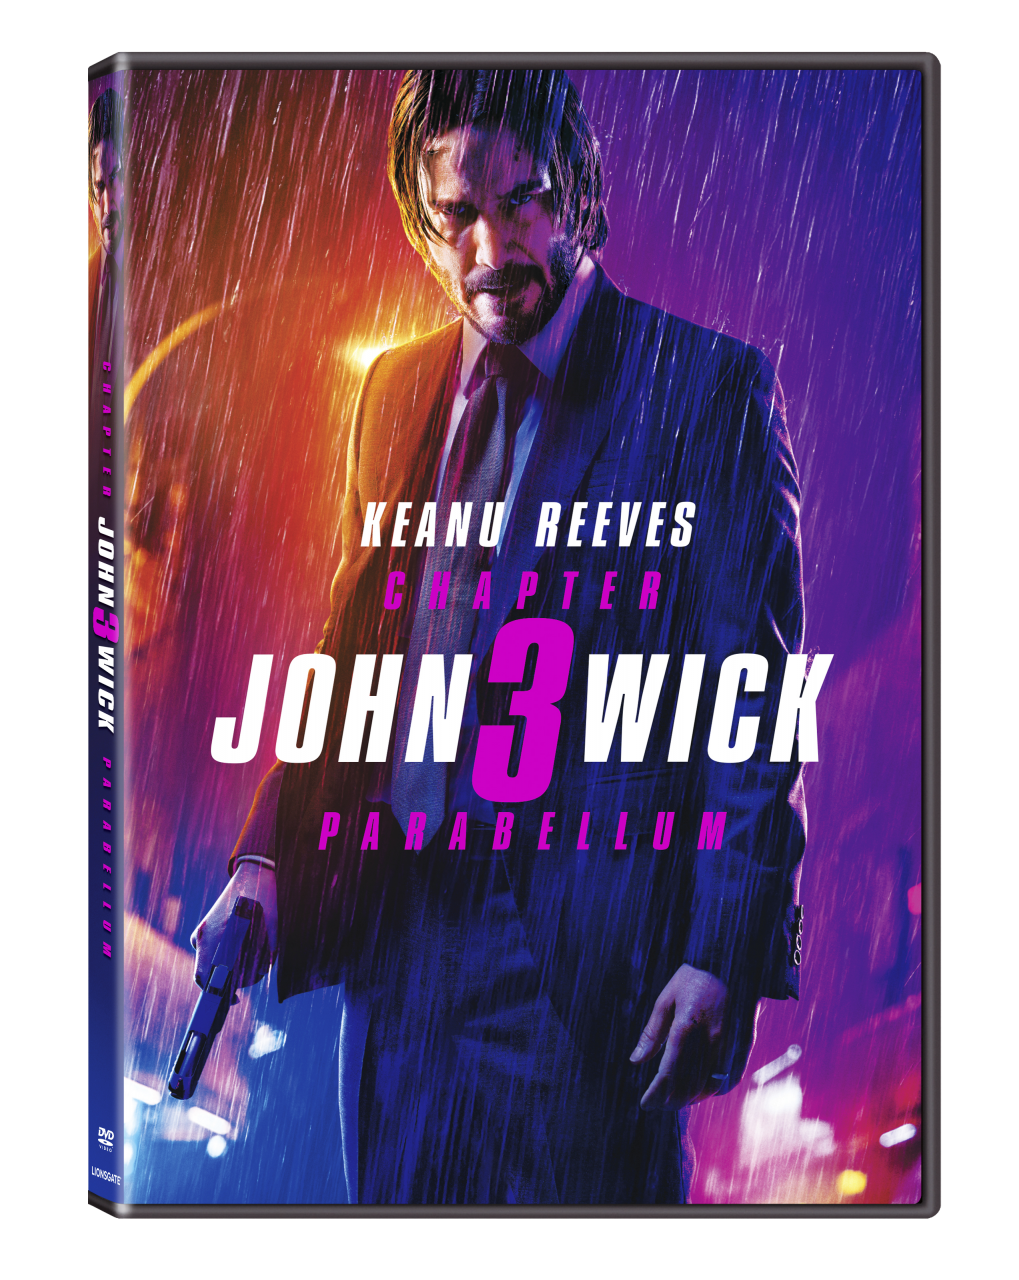 John Wick: Chapter 3 - Parabellum DVD cover (Lionsgate Home Entertainment)